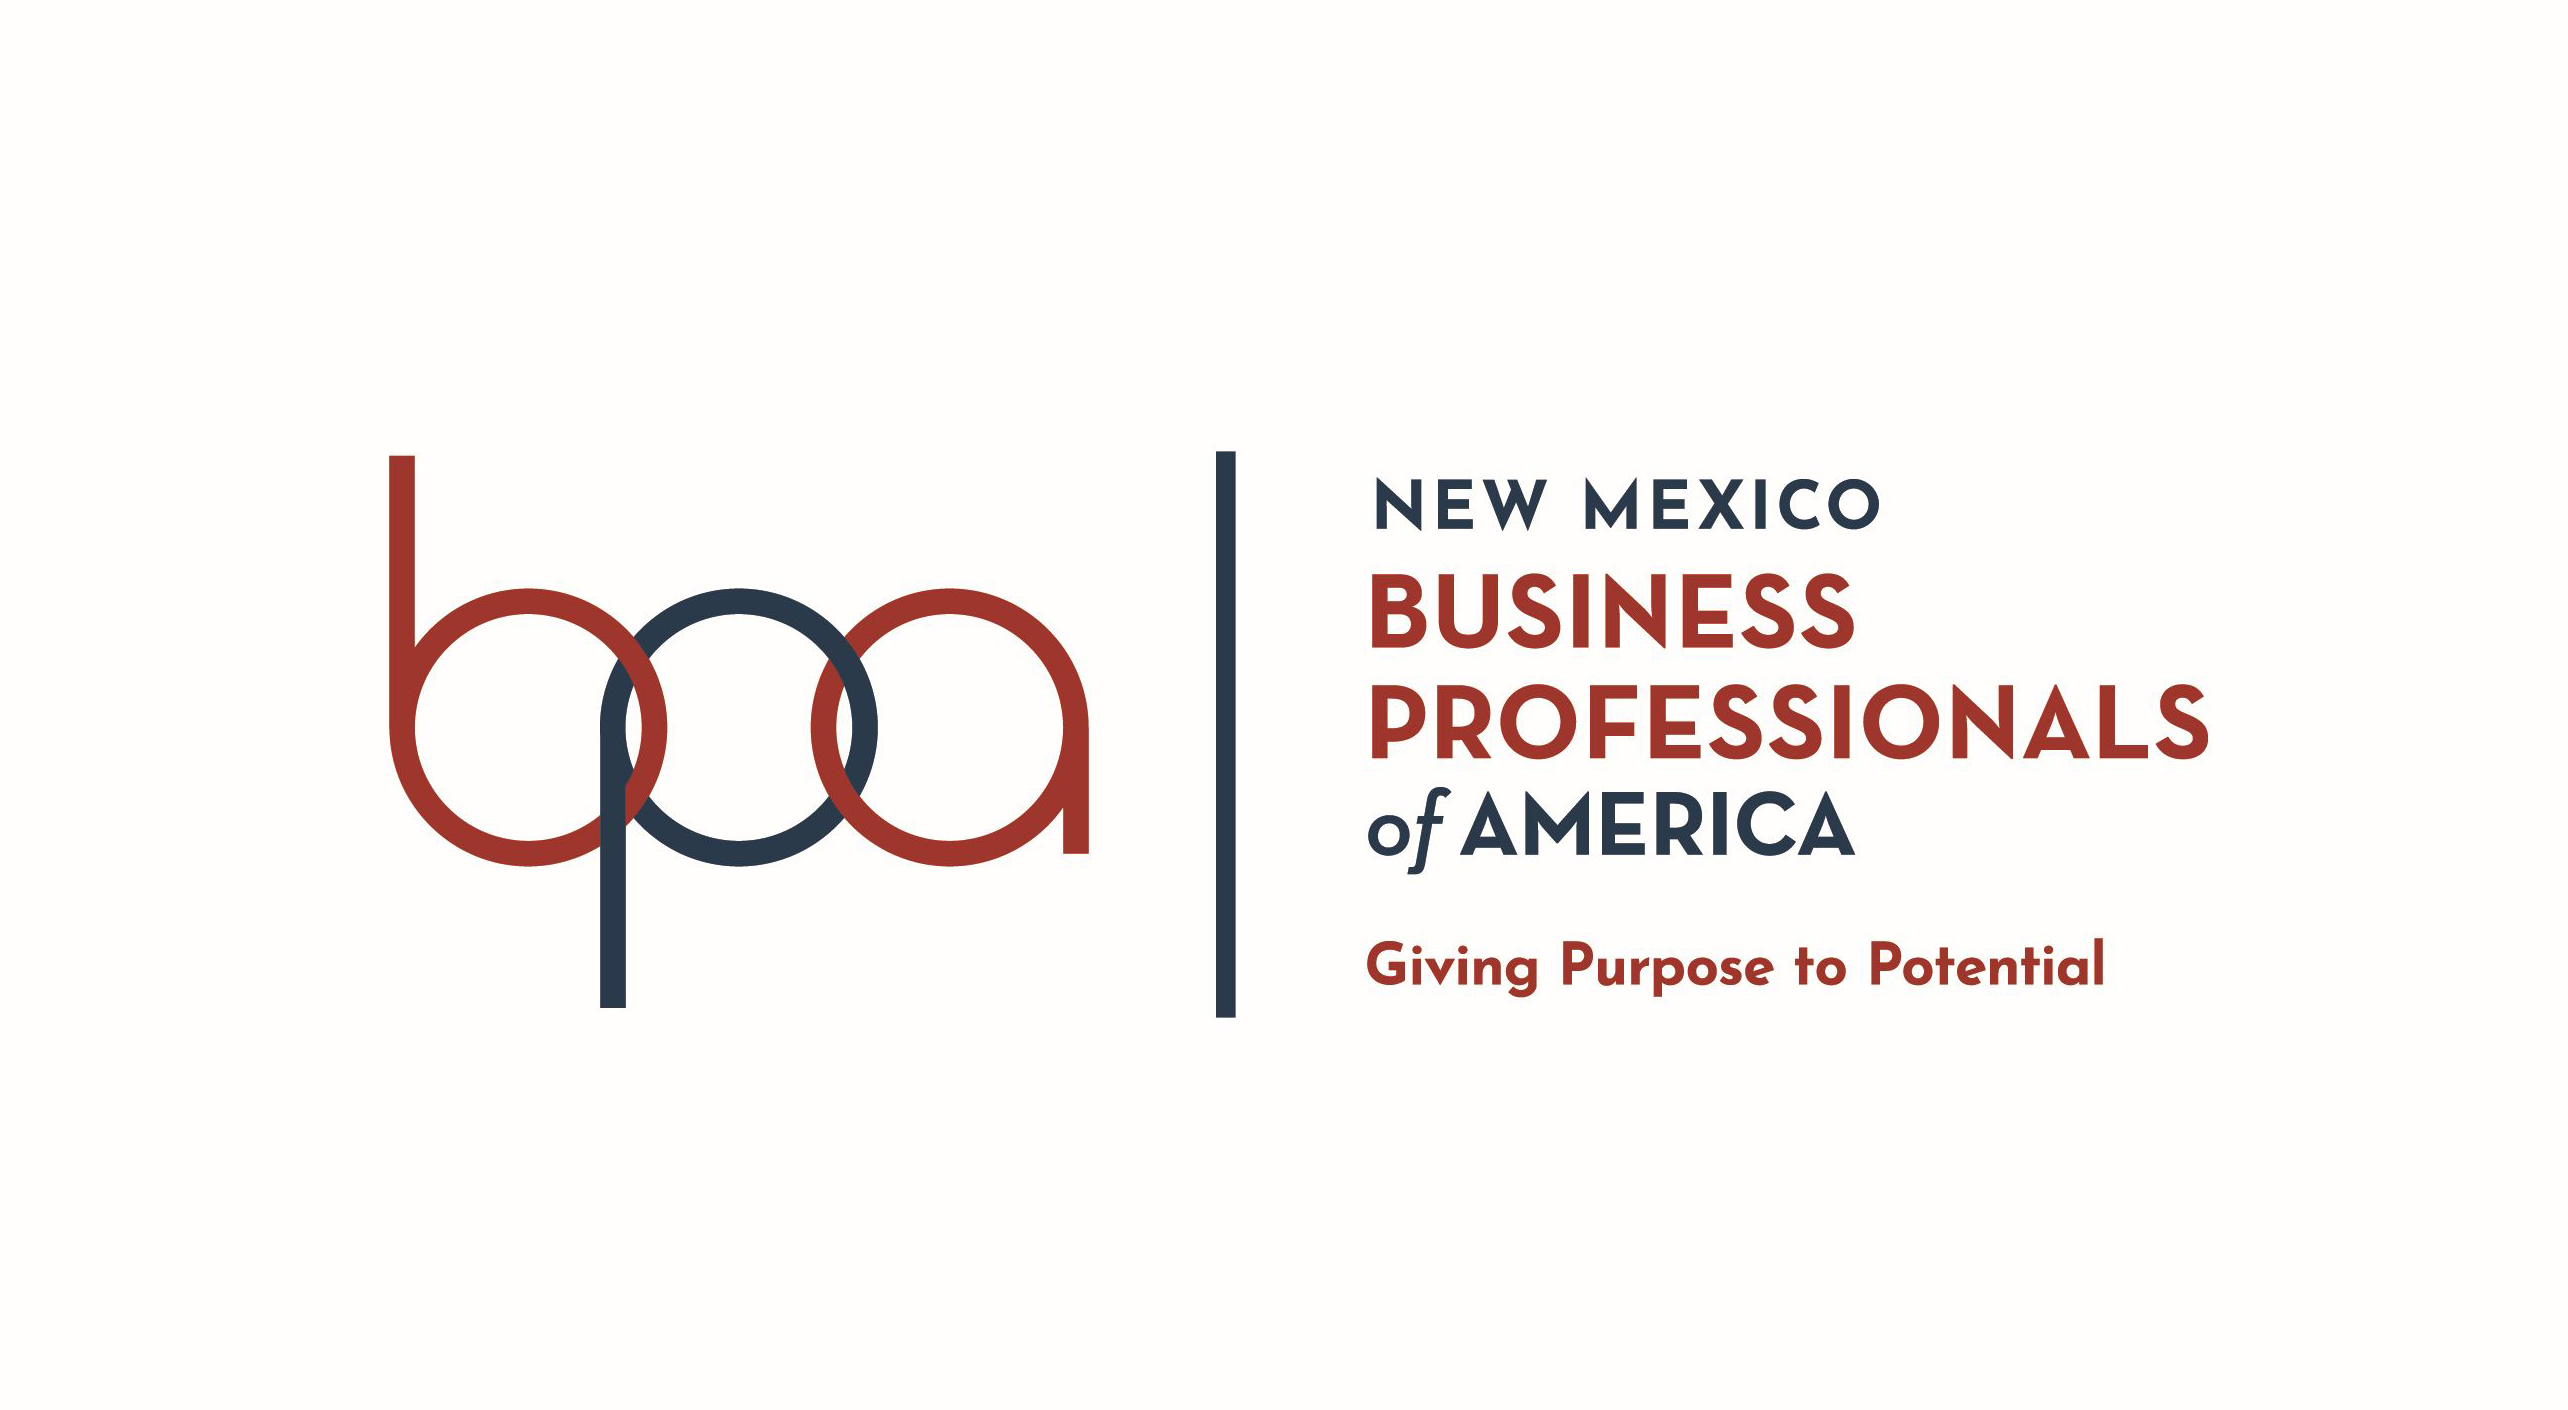 Business Professionals of America Logo